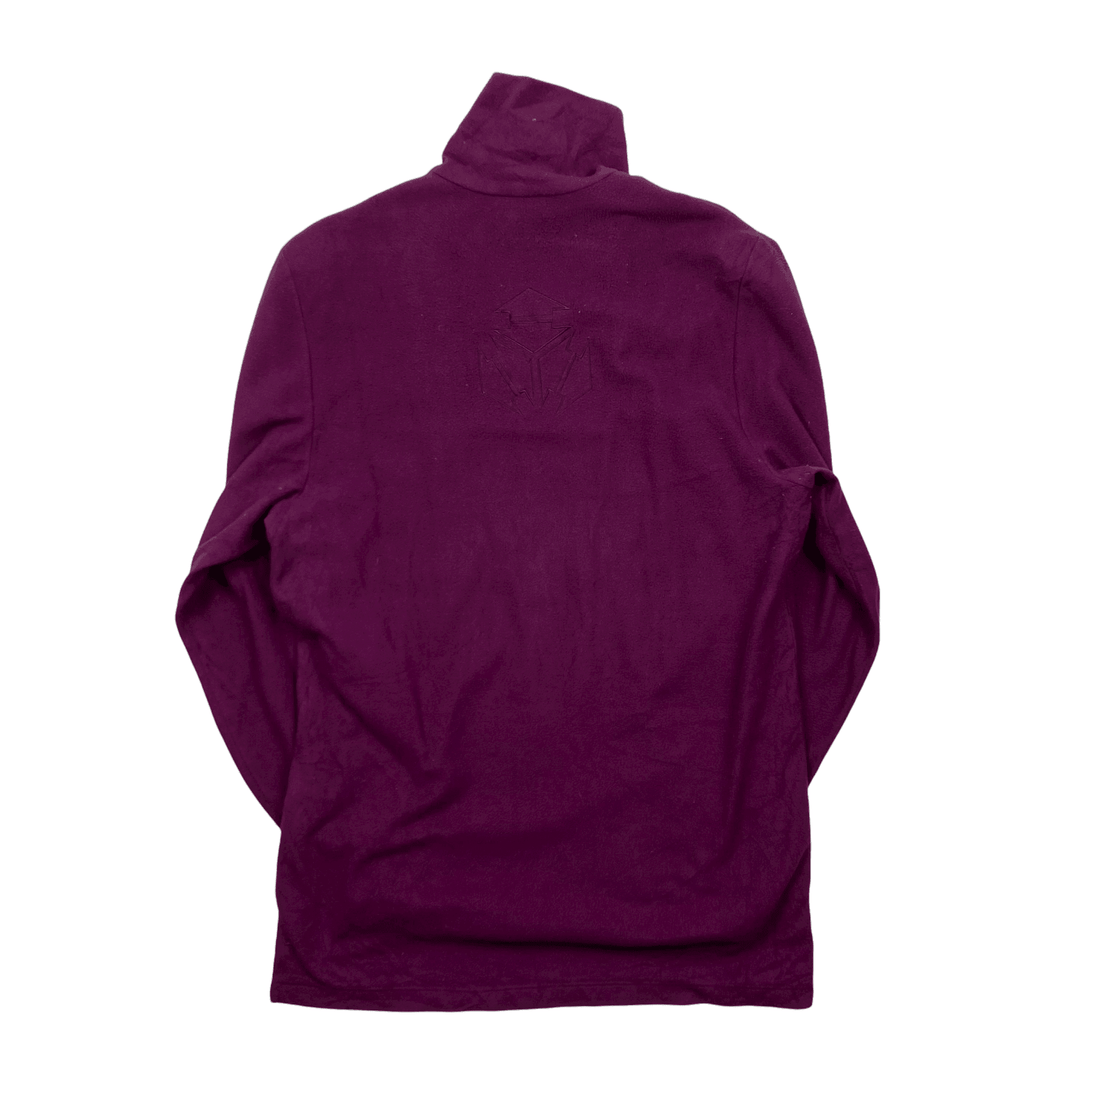 Vintage 90s Purple Adidas Centre Logo Quarter Zip Fleece - Large - The Streetwear Studio